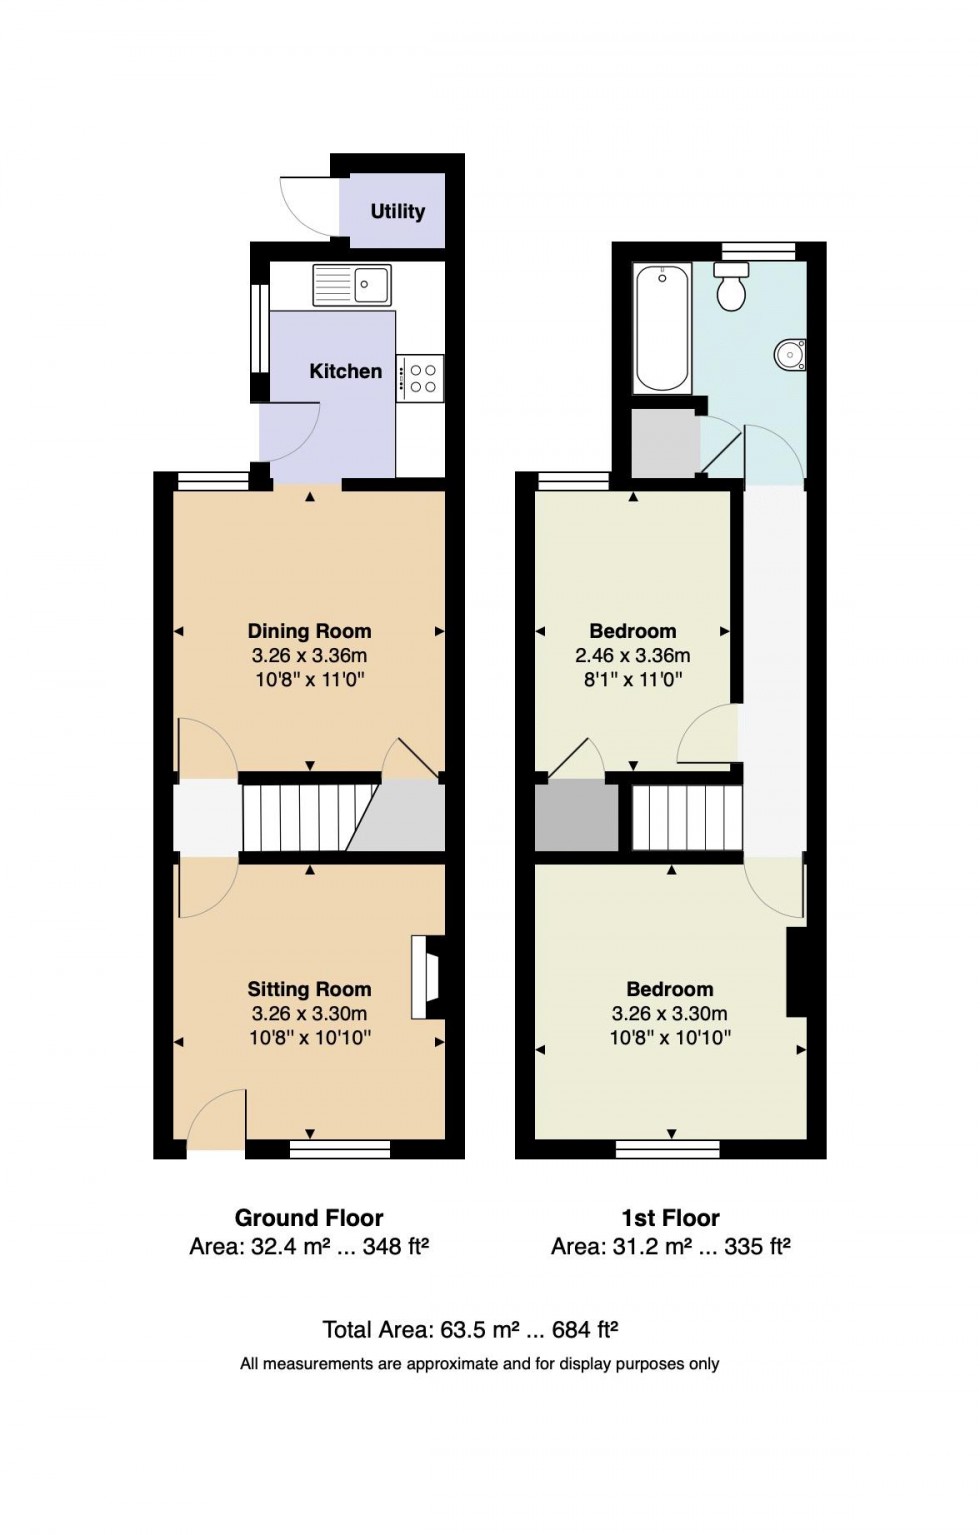 Floorplan for 2 Bedroom Victorian Cottage with Amazing Views, Fairglen Road, Wadhurst